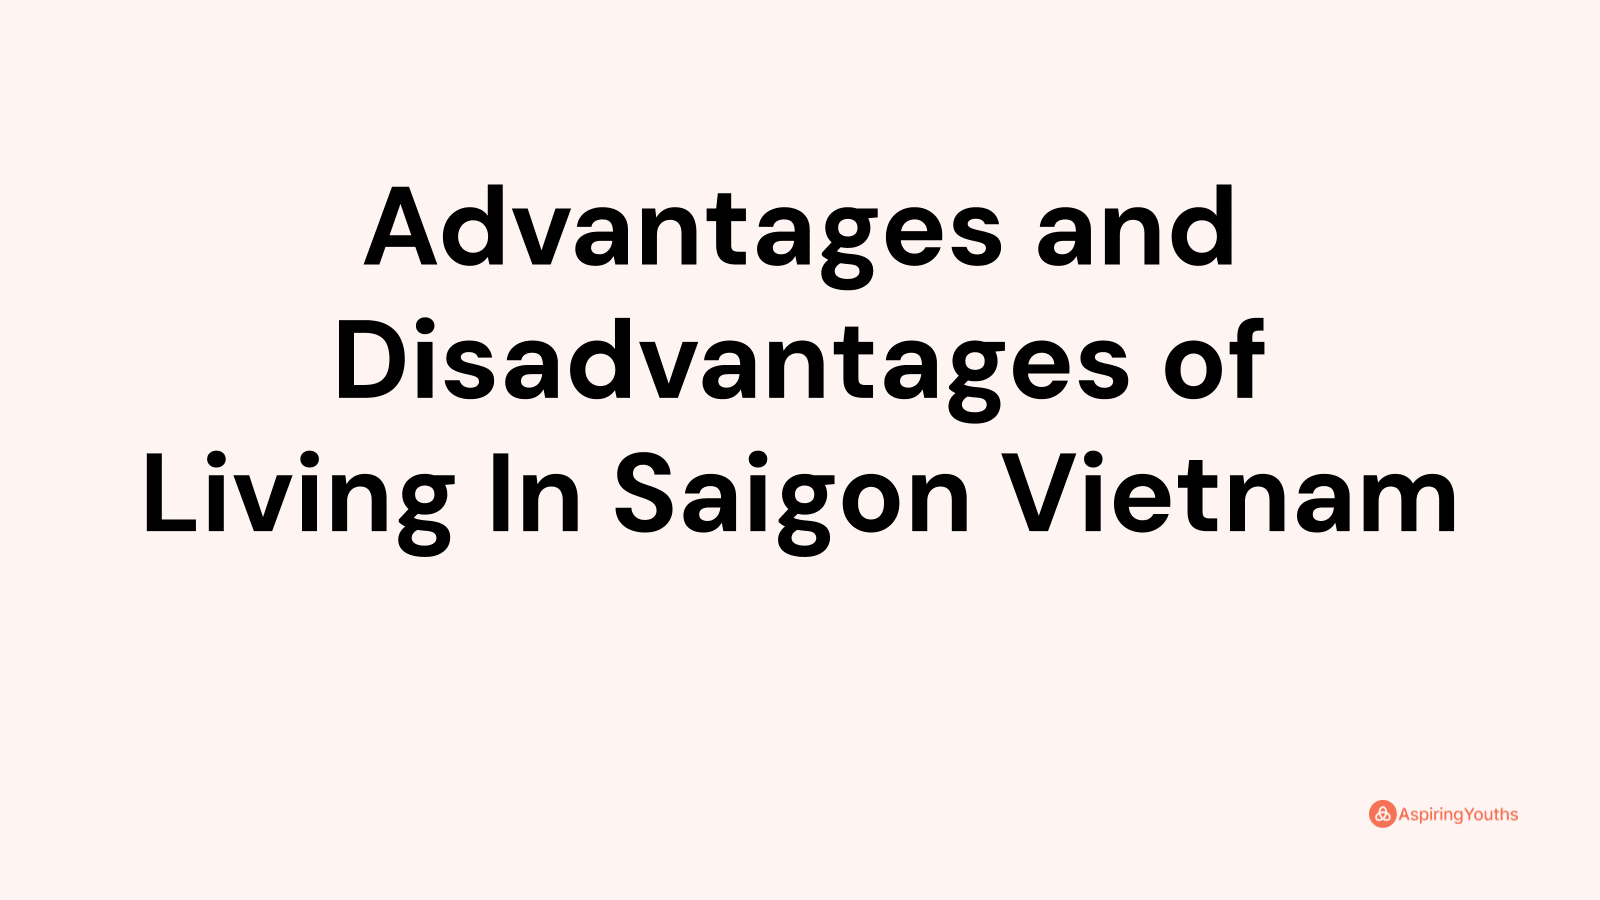 Advantages and disadvantages of Living In Saigon Vietnam